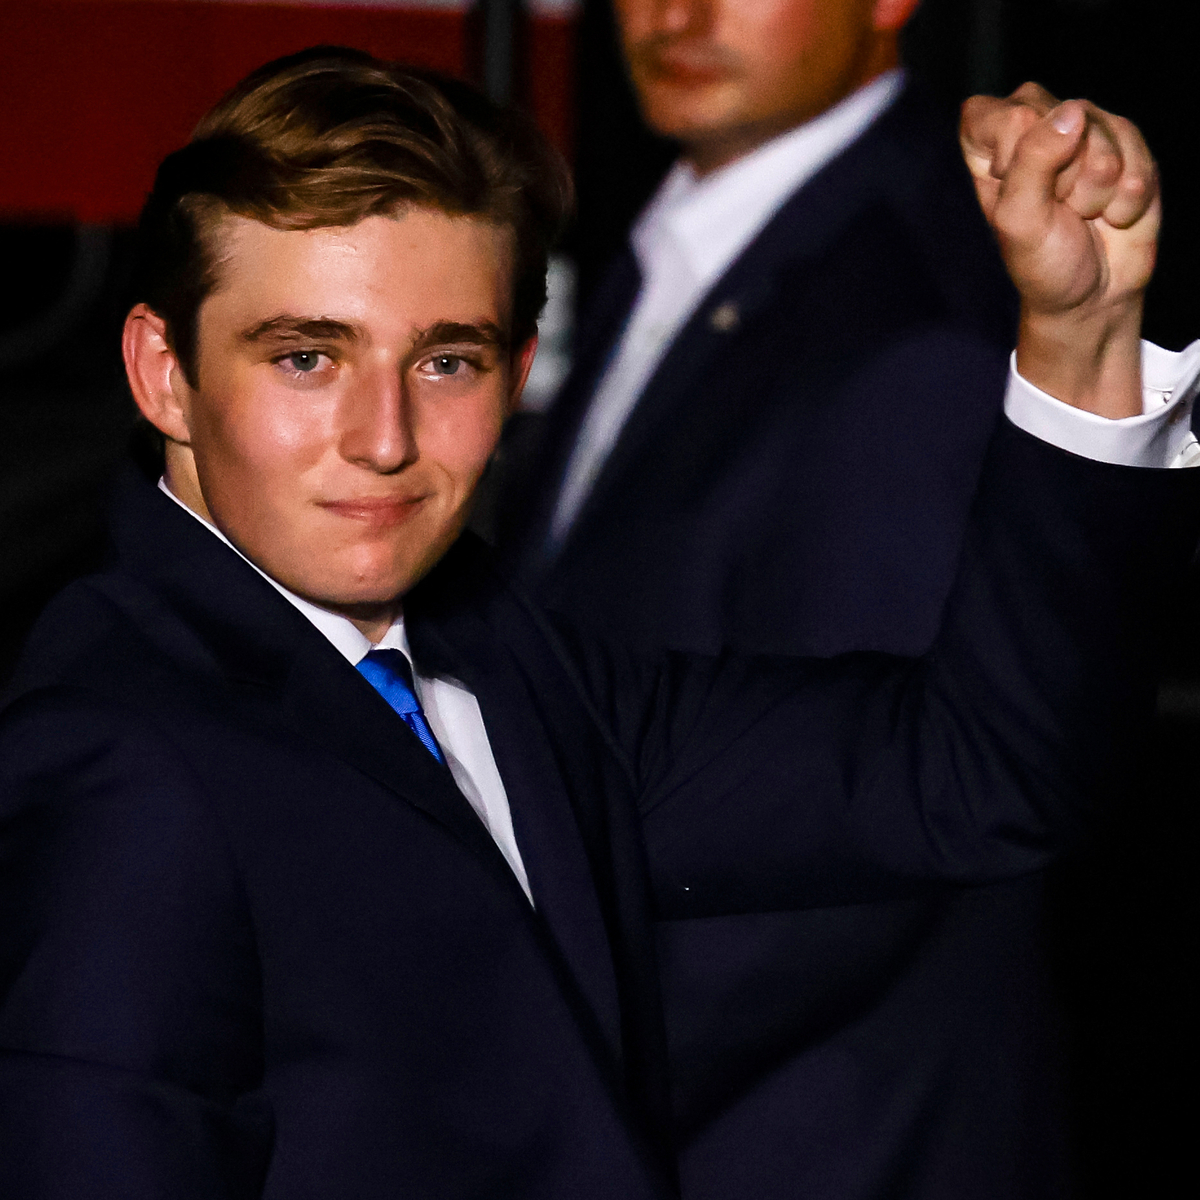 Who Is Barron Trump? Meet Donald Trump’s 18-Year-Old Son